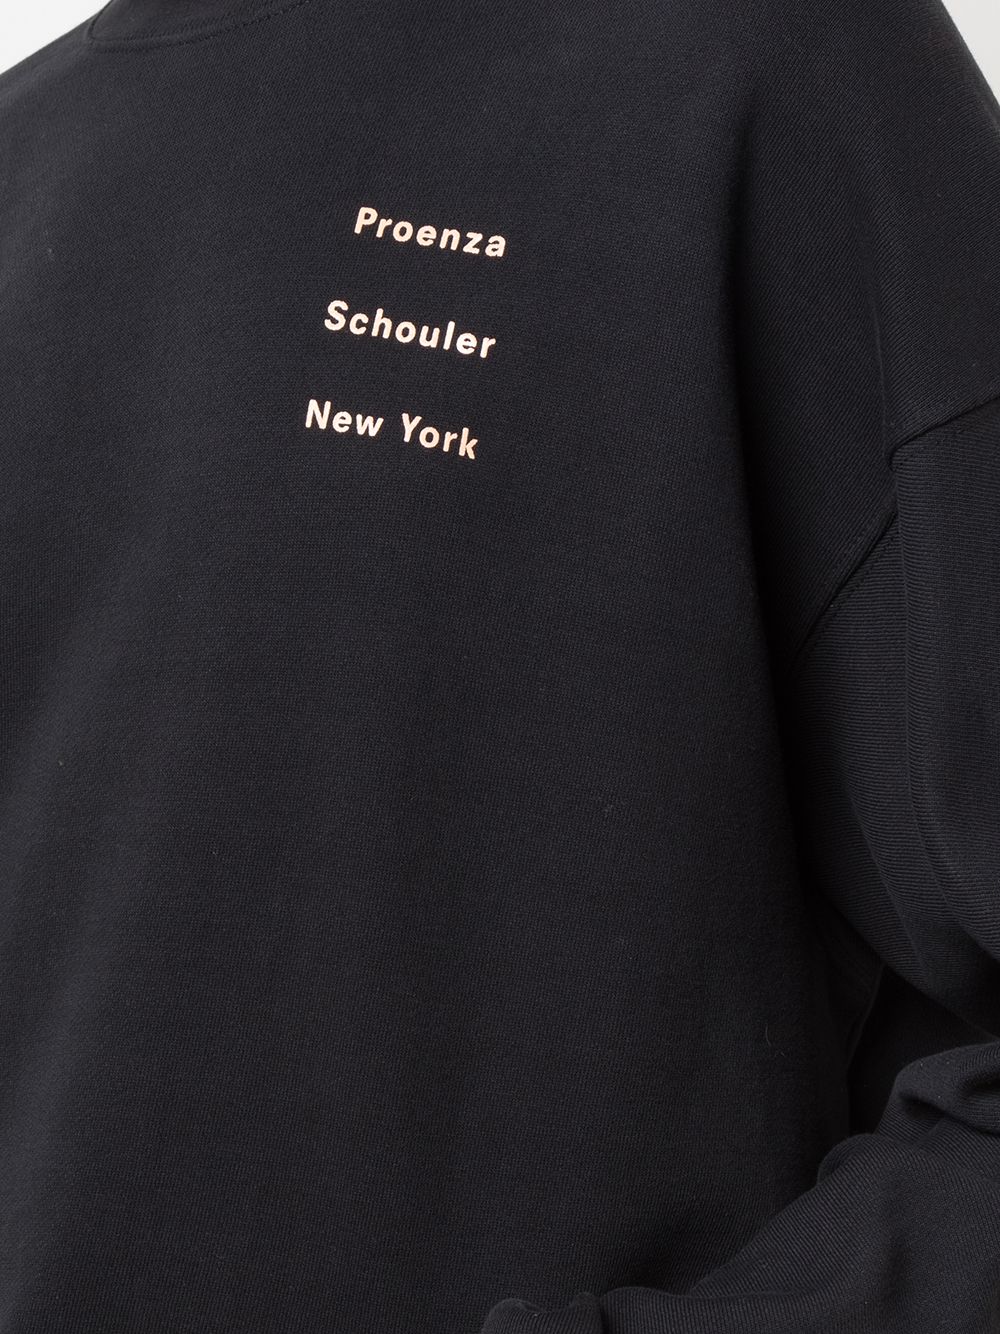 фото Proenza schouler white label толстовка с длинными рукавами